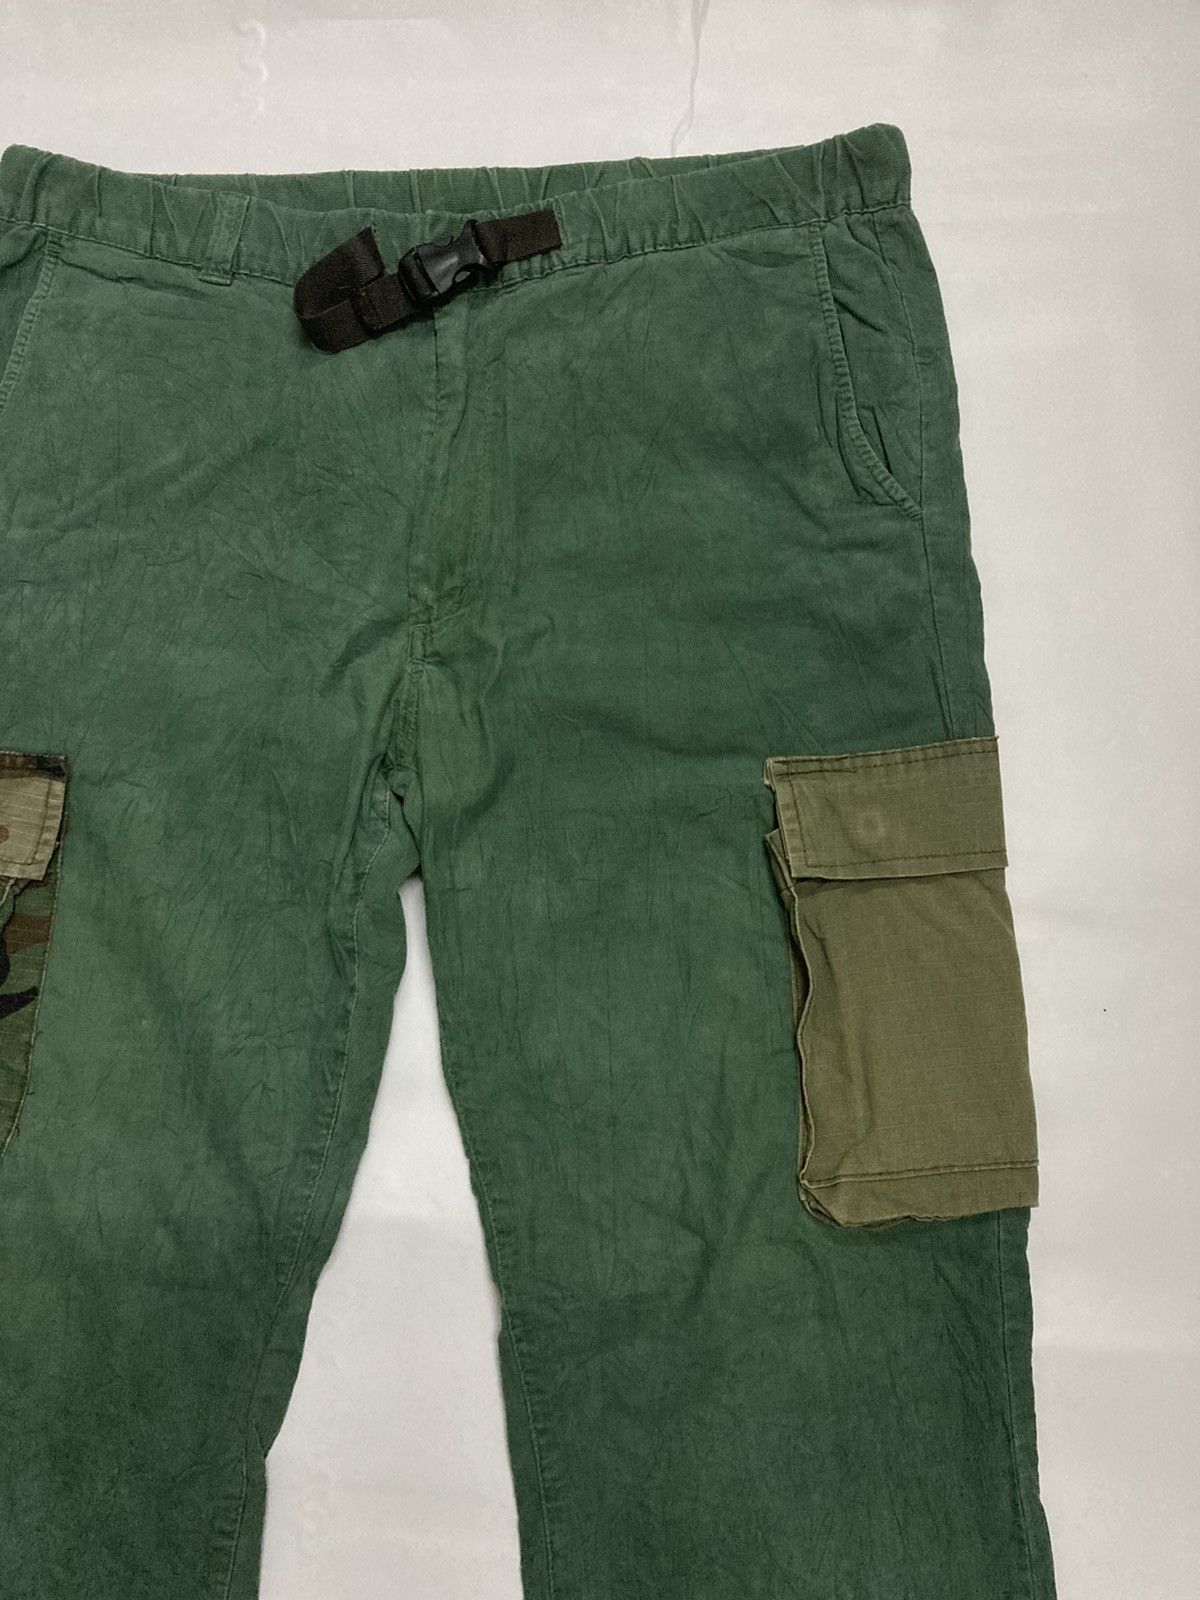 Uniqlo Custom Cargo Army Pocket Corduroy Pants - 4